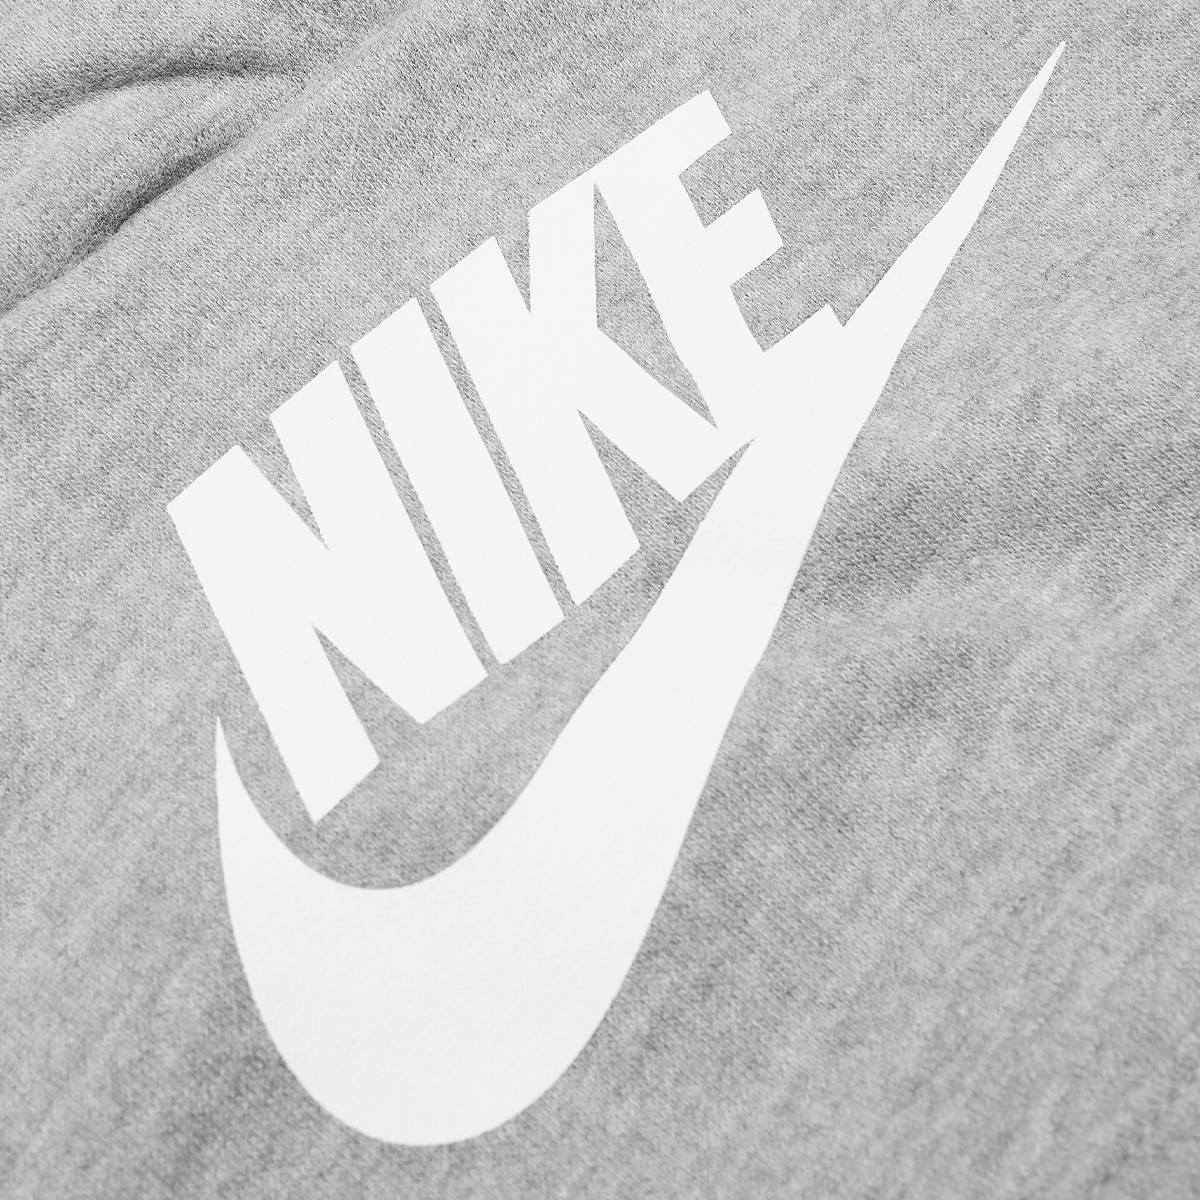 Nike Club Fleece Set Baby sets Kleding dk grey heather maat: 24 m beschikbare maaten:12 m 18 m 24 m